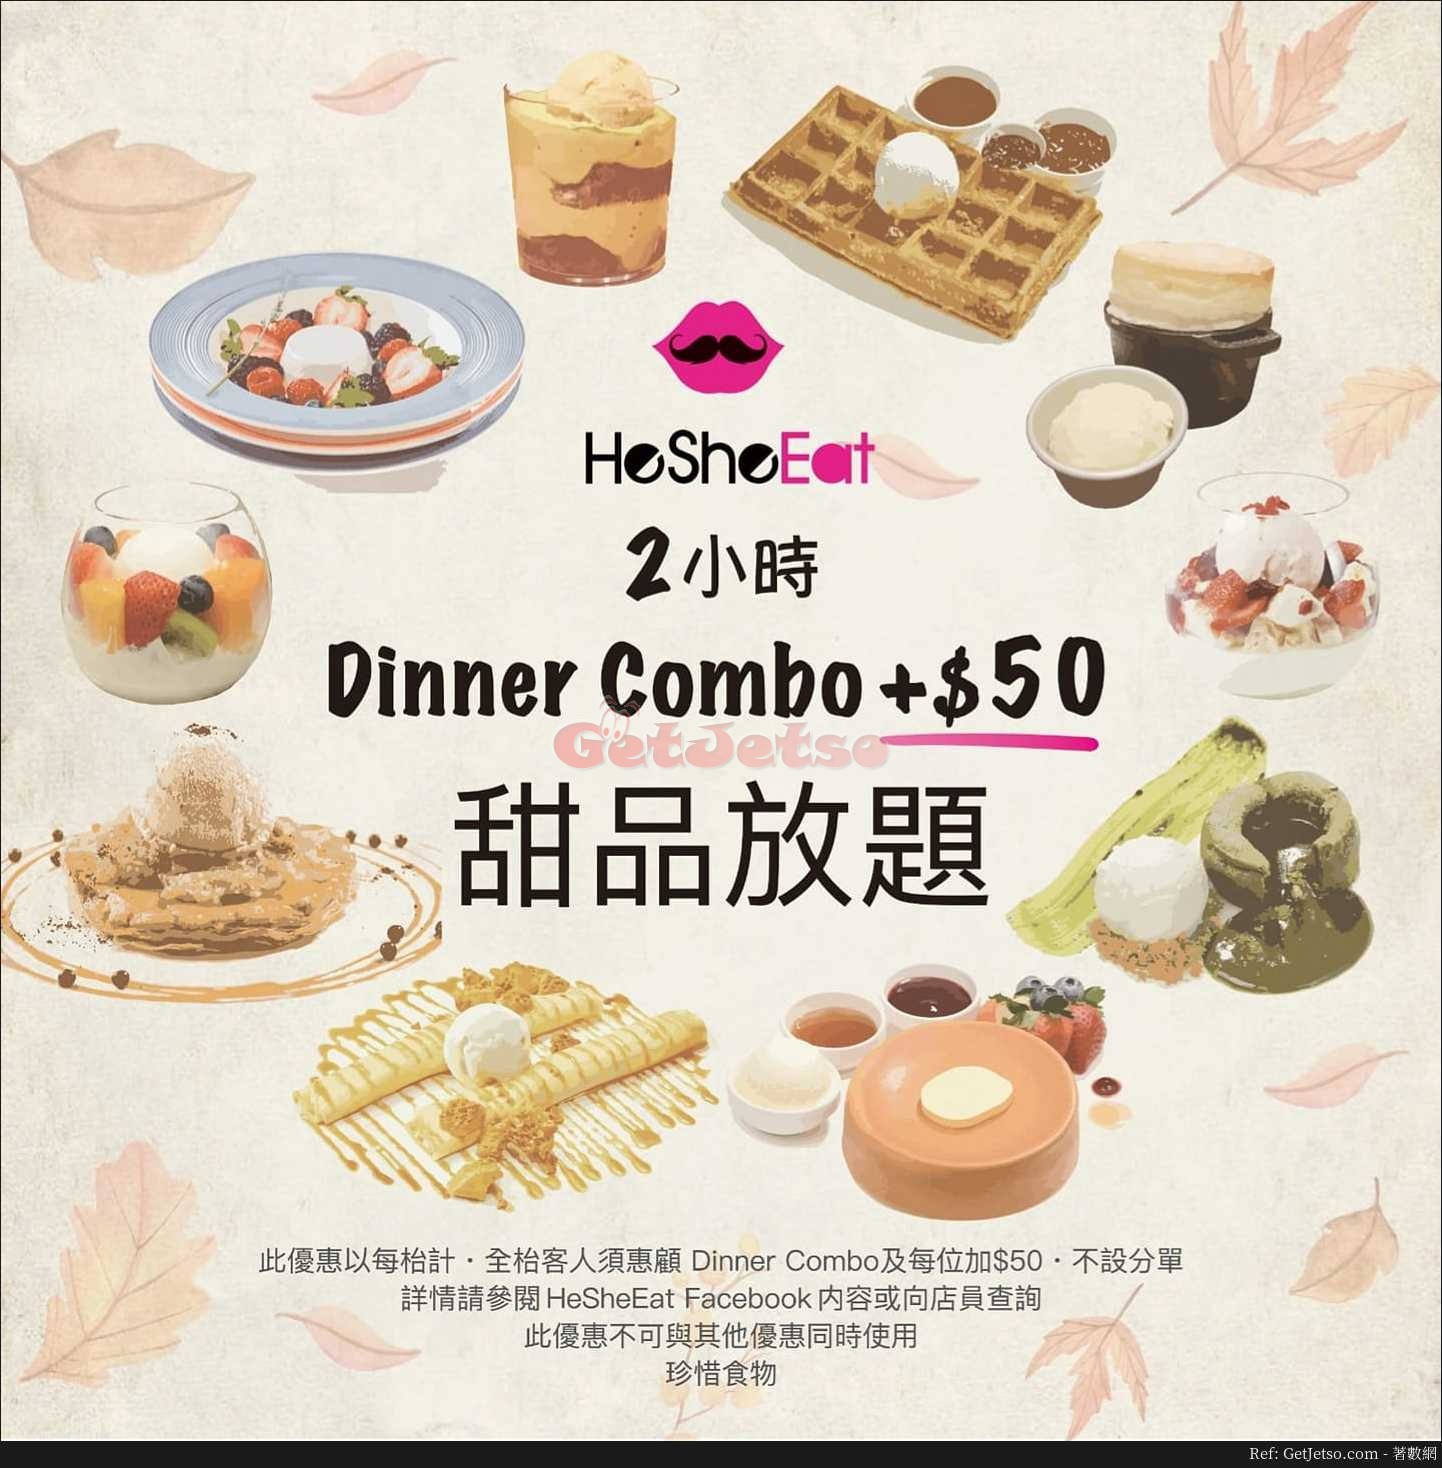 HeSheEat 逢星期日至四2小時晚餐+甜品任食(至18年11月22日)圖片1